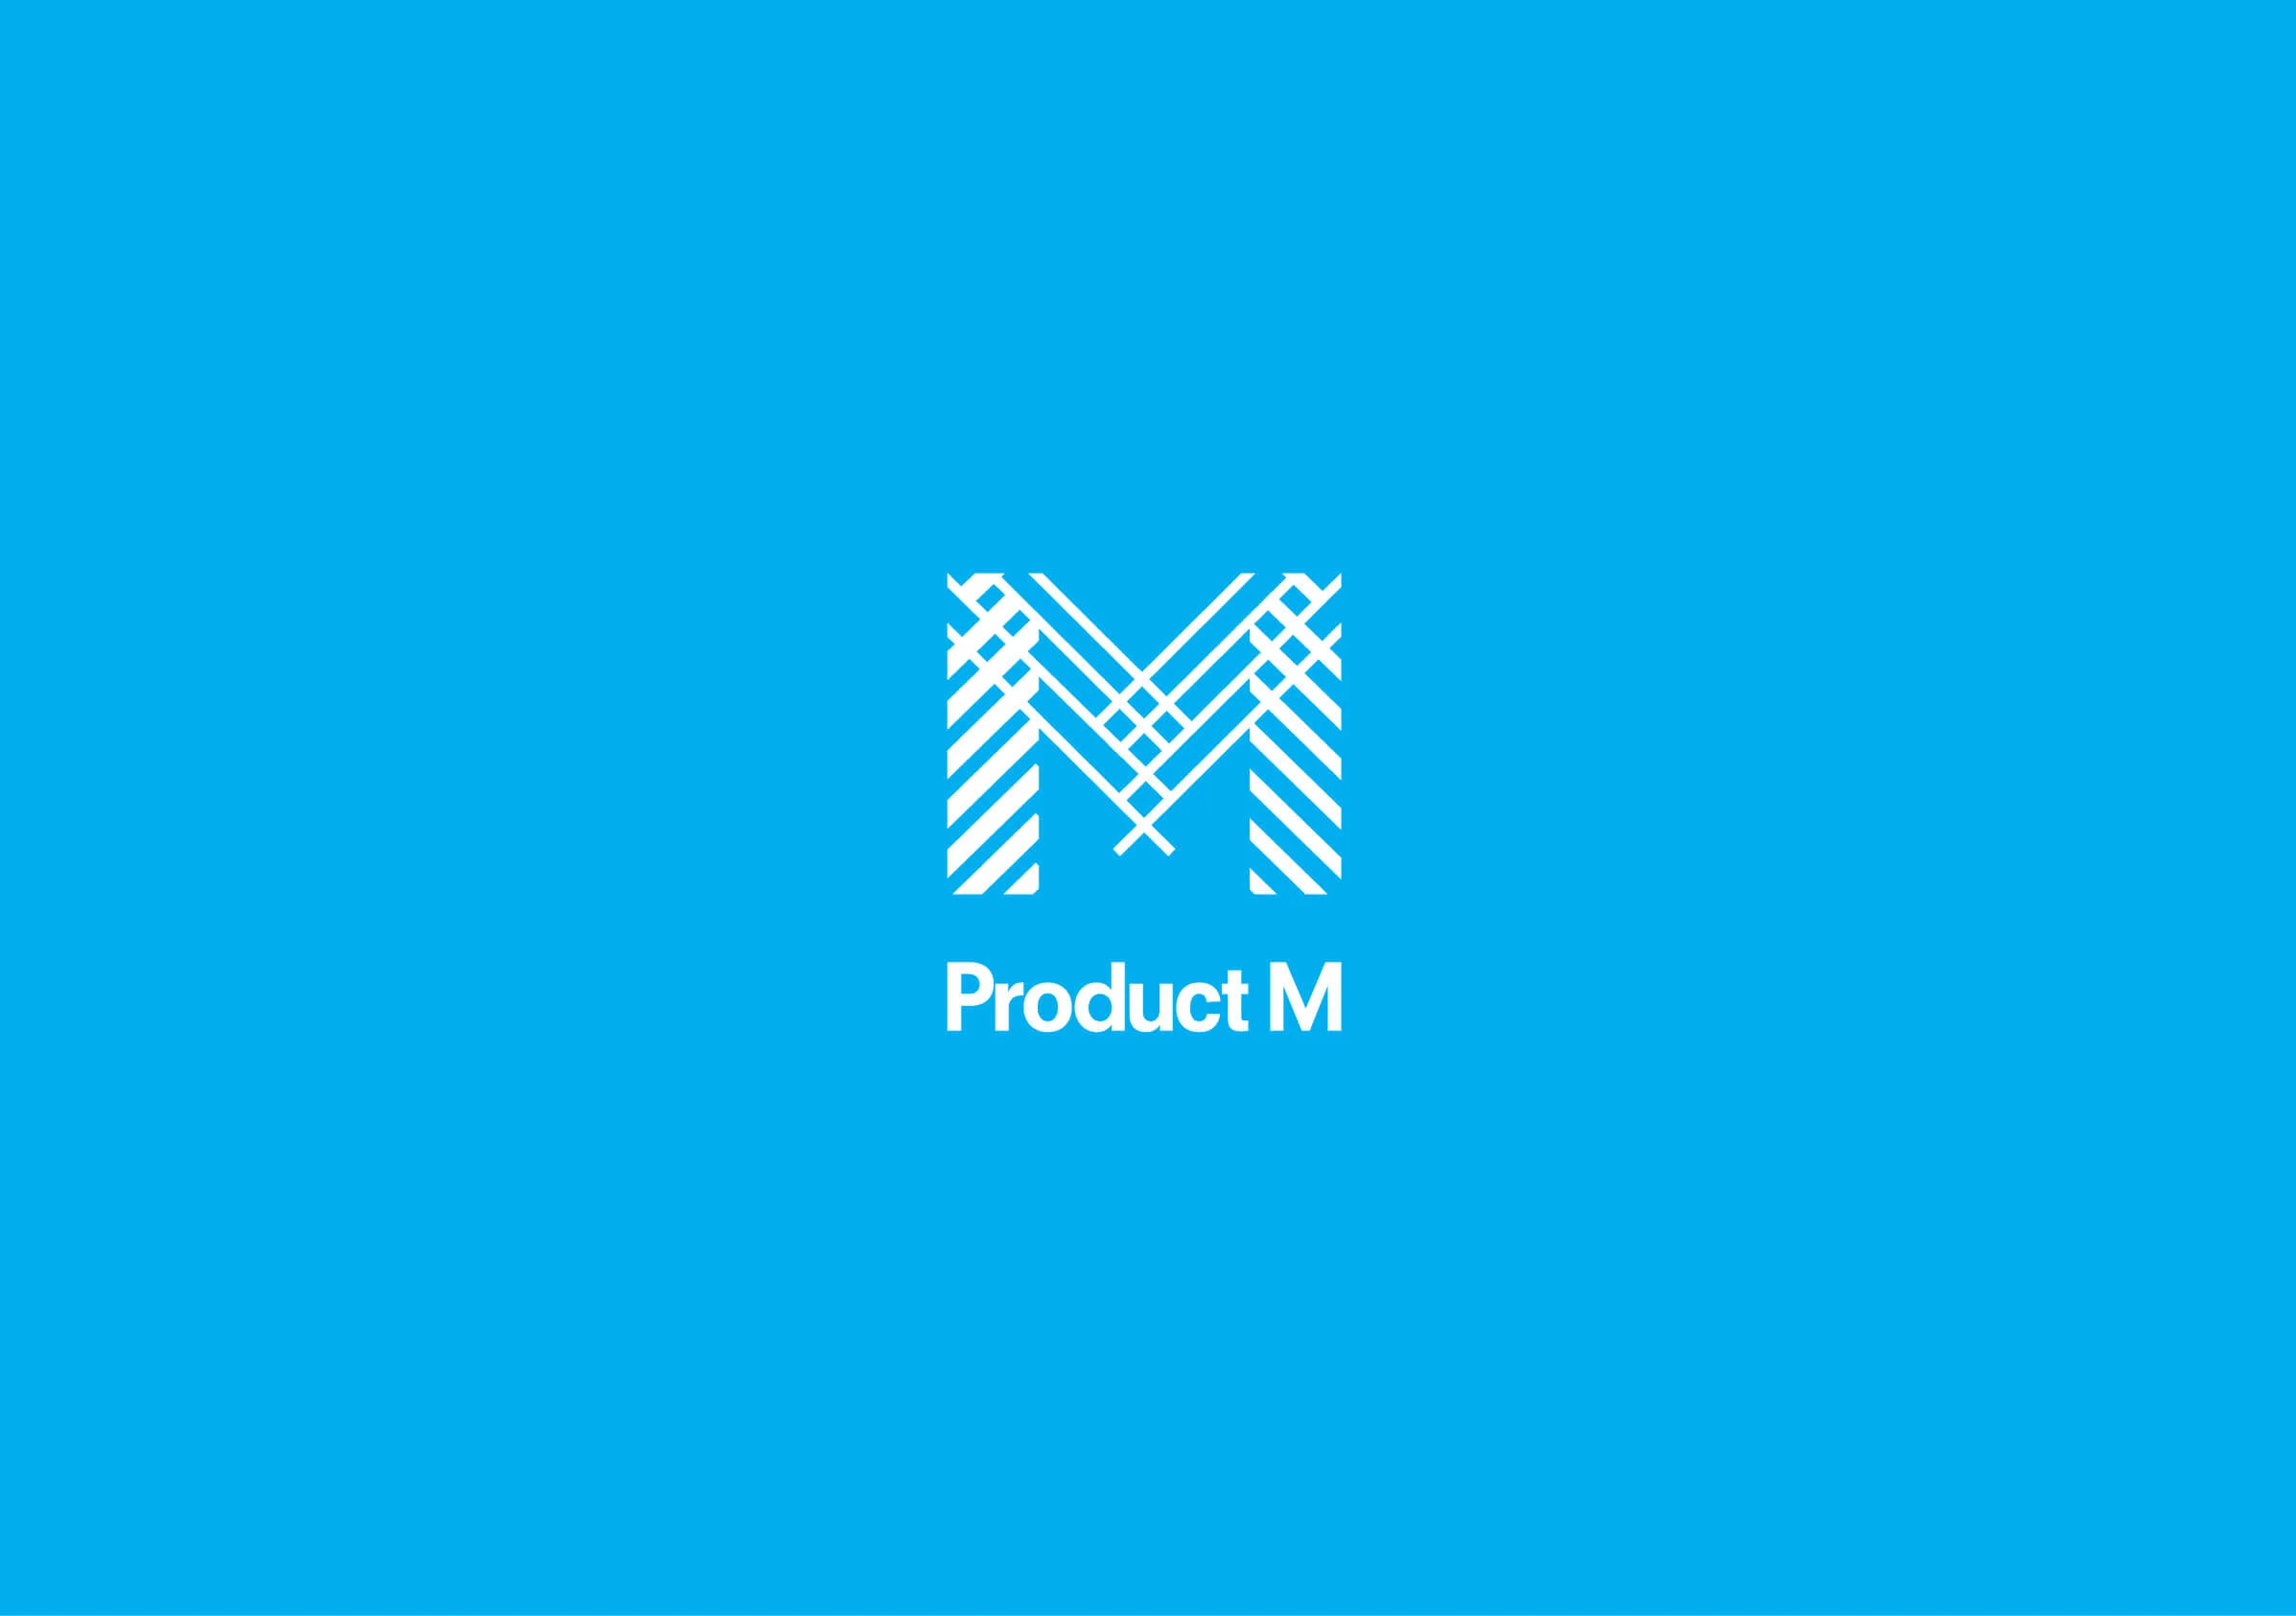 Product M logo for New York-based product marketing company by Ottawa graphic designer idApostle